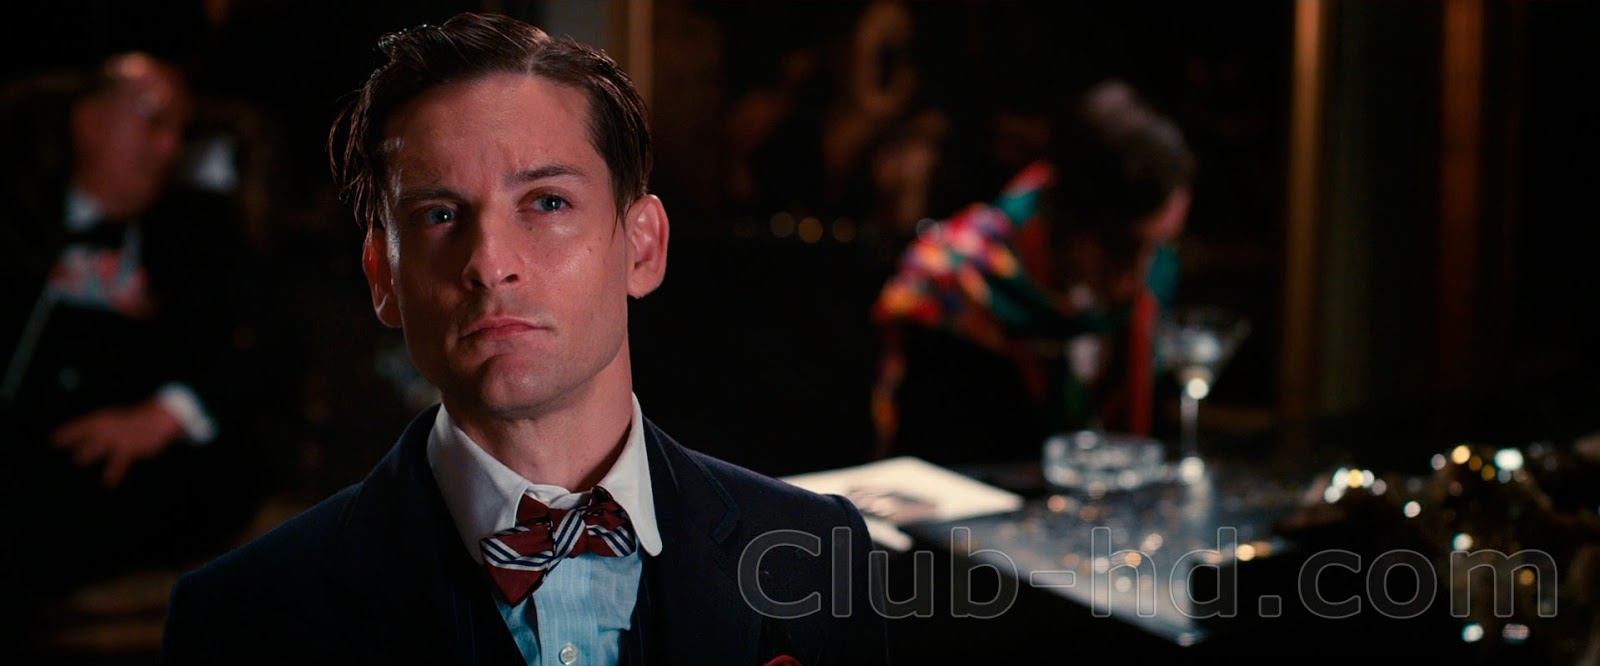 The Great Gatsby (2013) 1080p BDRip Dual Latino-Inglés [Subt. Esp] (Drama. Romance)